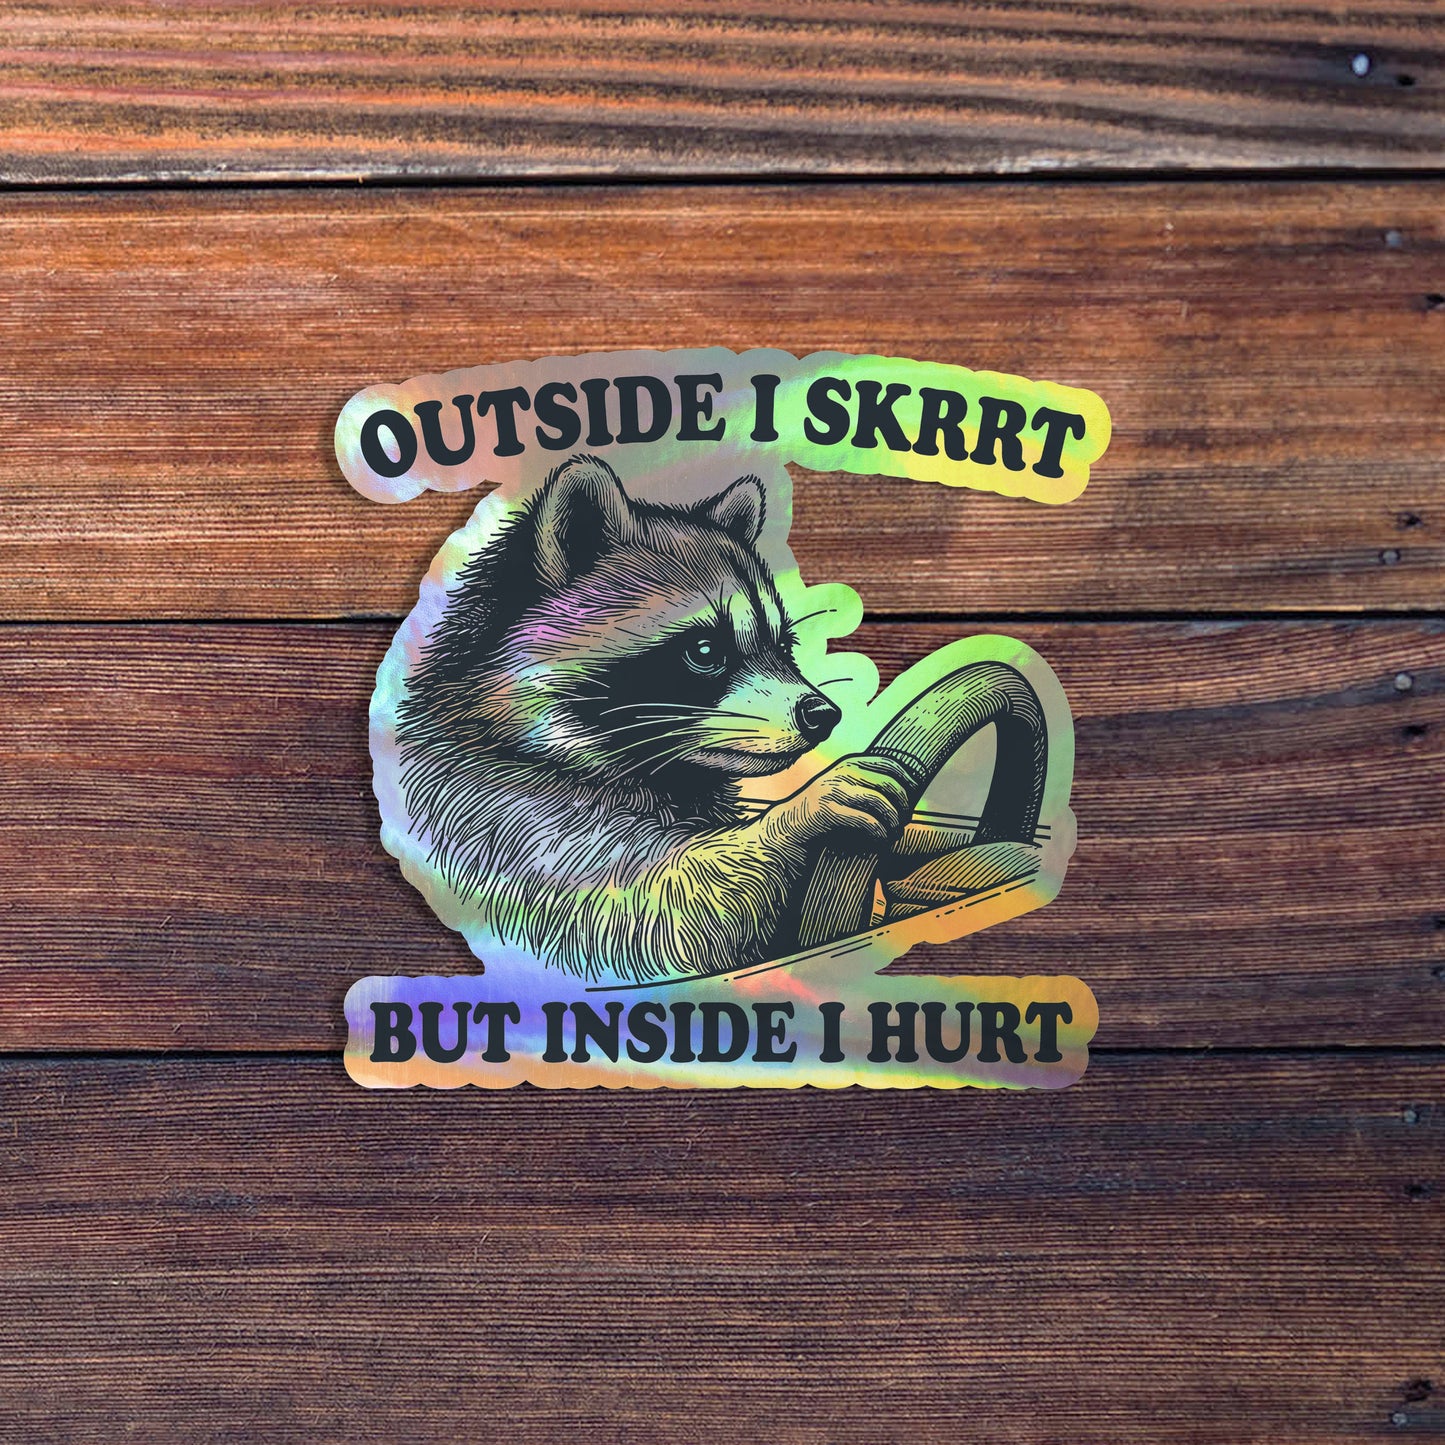 Outside I Skrrt But Inside I Hurt Raccoon Driving Waterproof Weatherproof Vinyl Sticker Decal